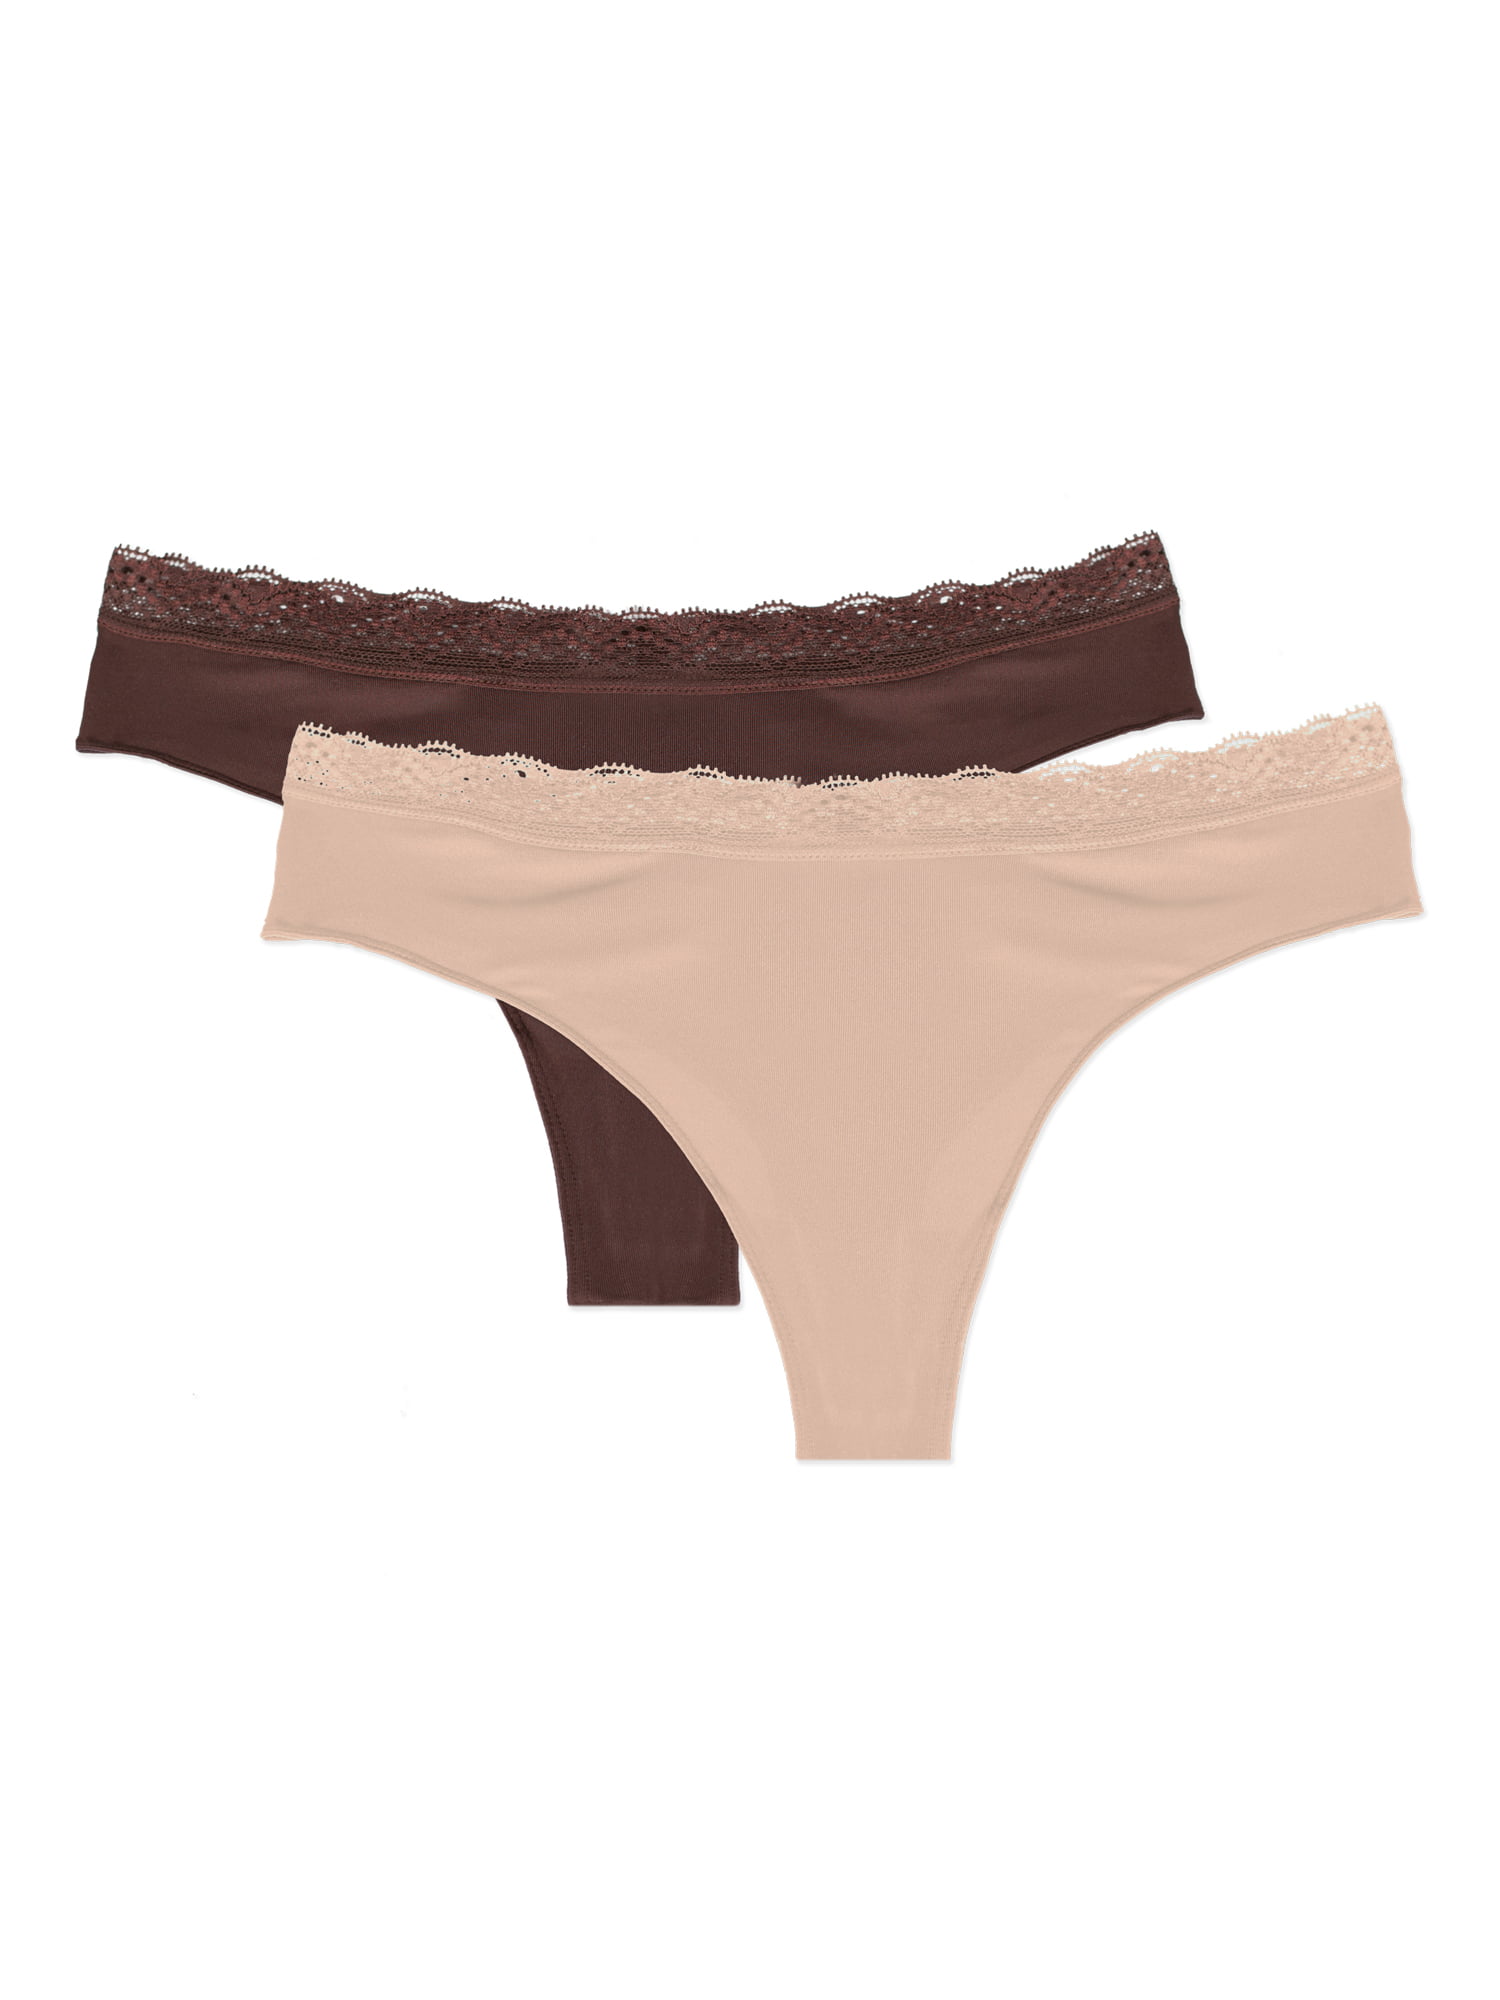 Smart & Sexy Women's Lace Trim Thong Panty, 2-pack, Style-SA1376 